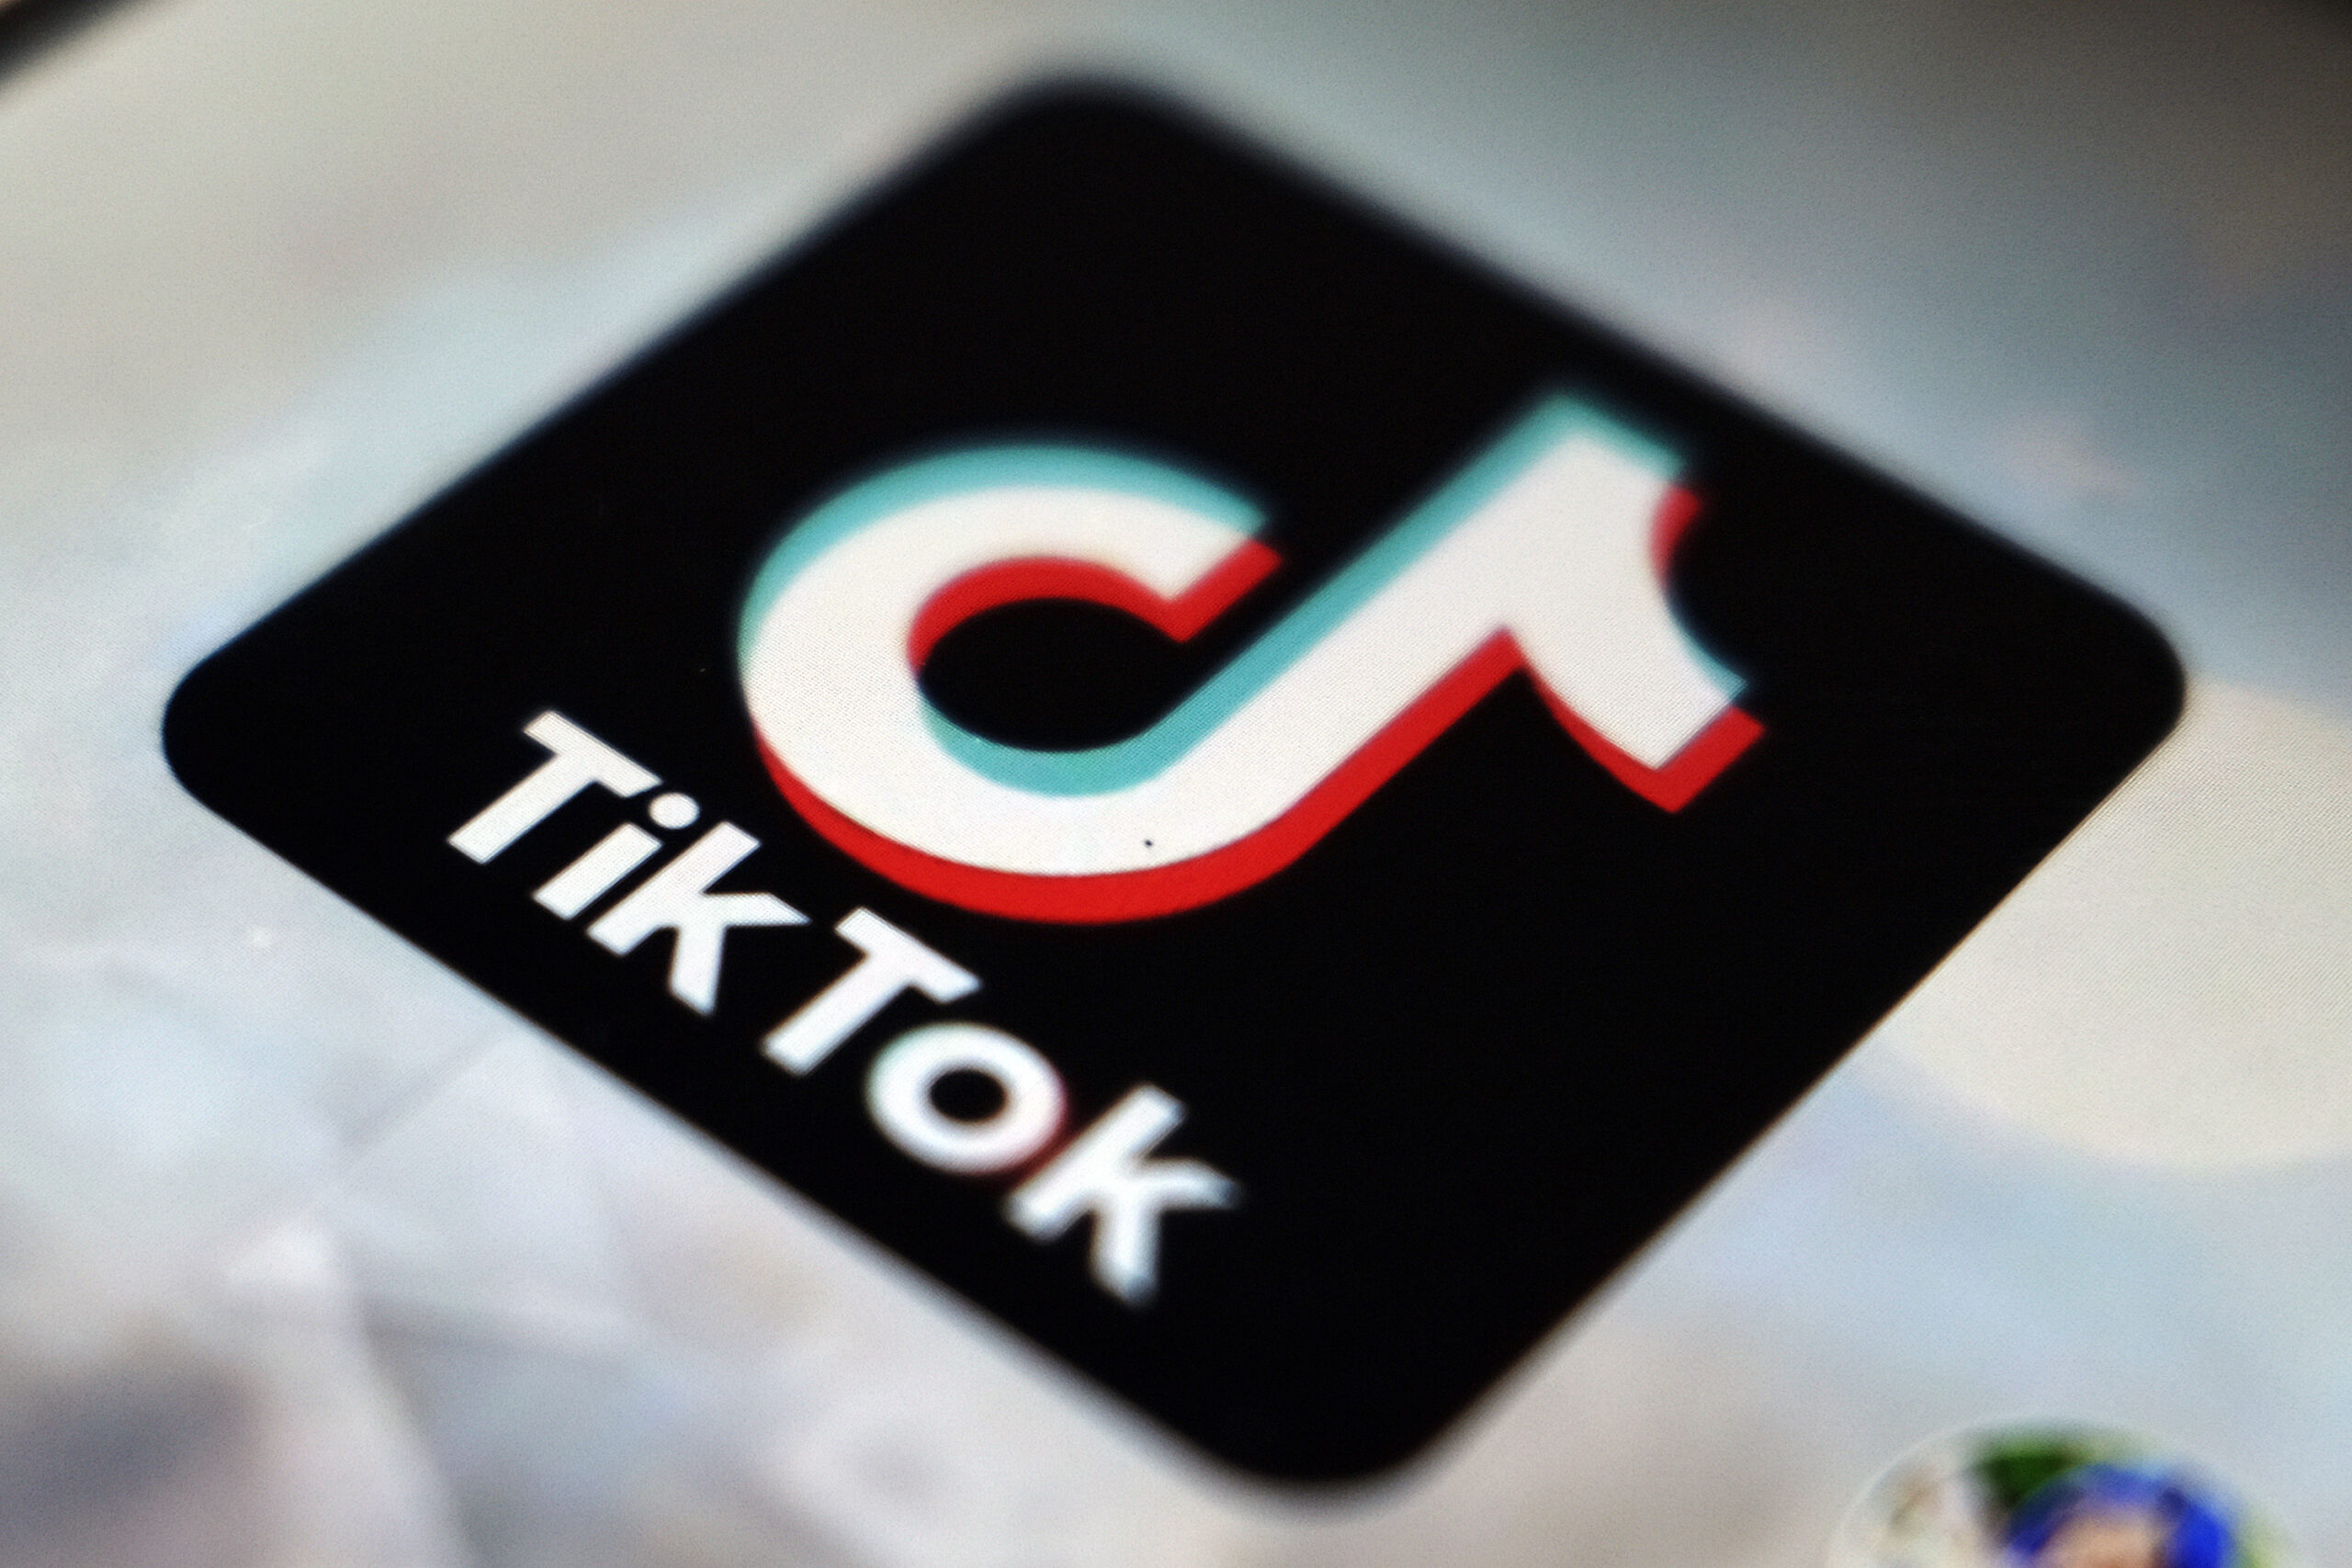 Over 3.5 million people in Greece use TikTok image